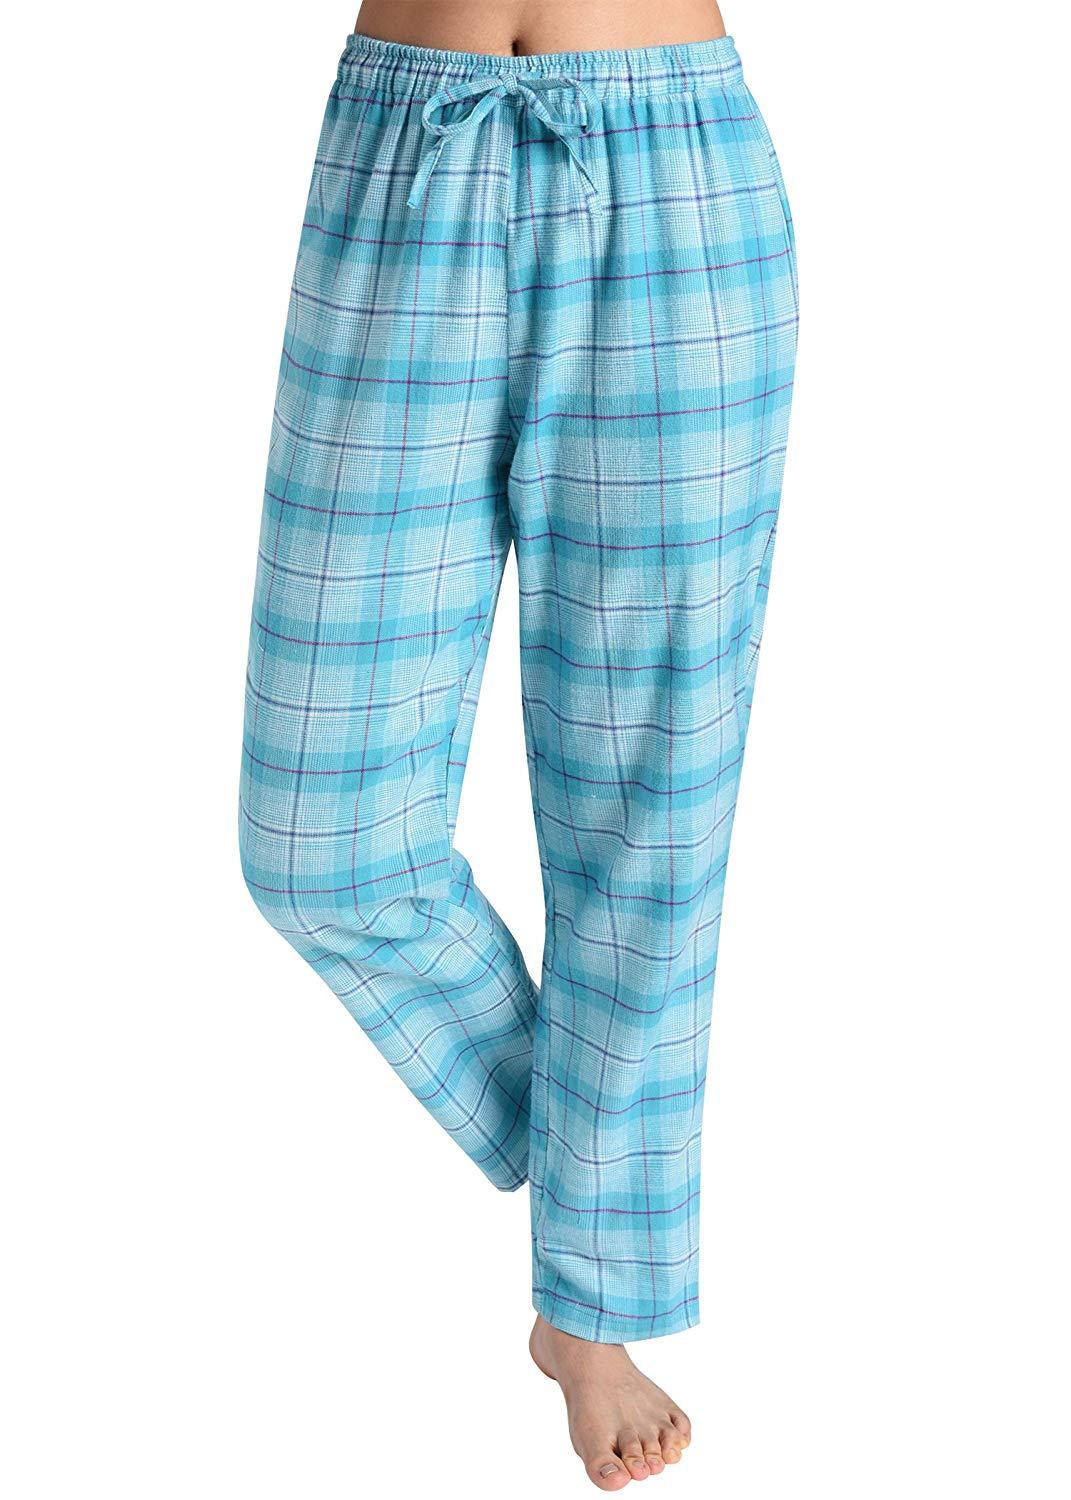 Ultra-Soft Women's Cotton Sleep Pants